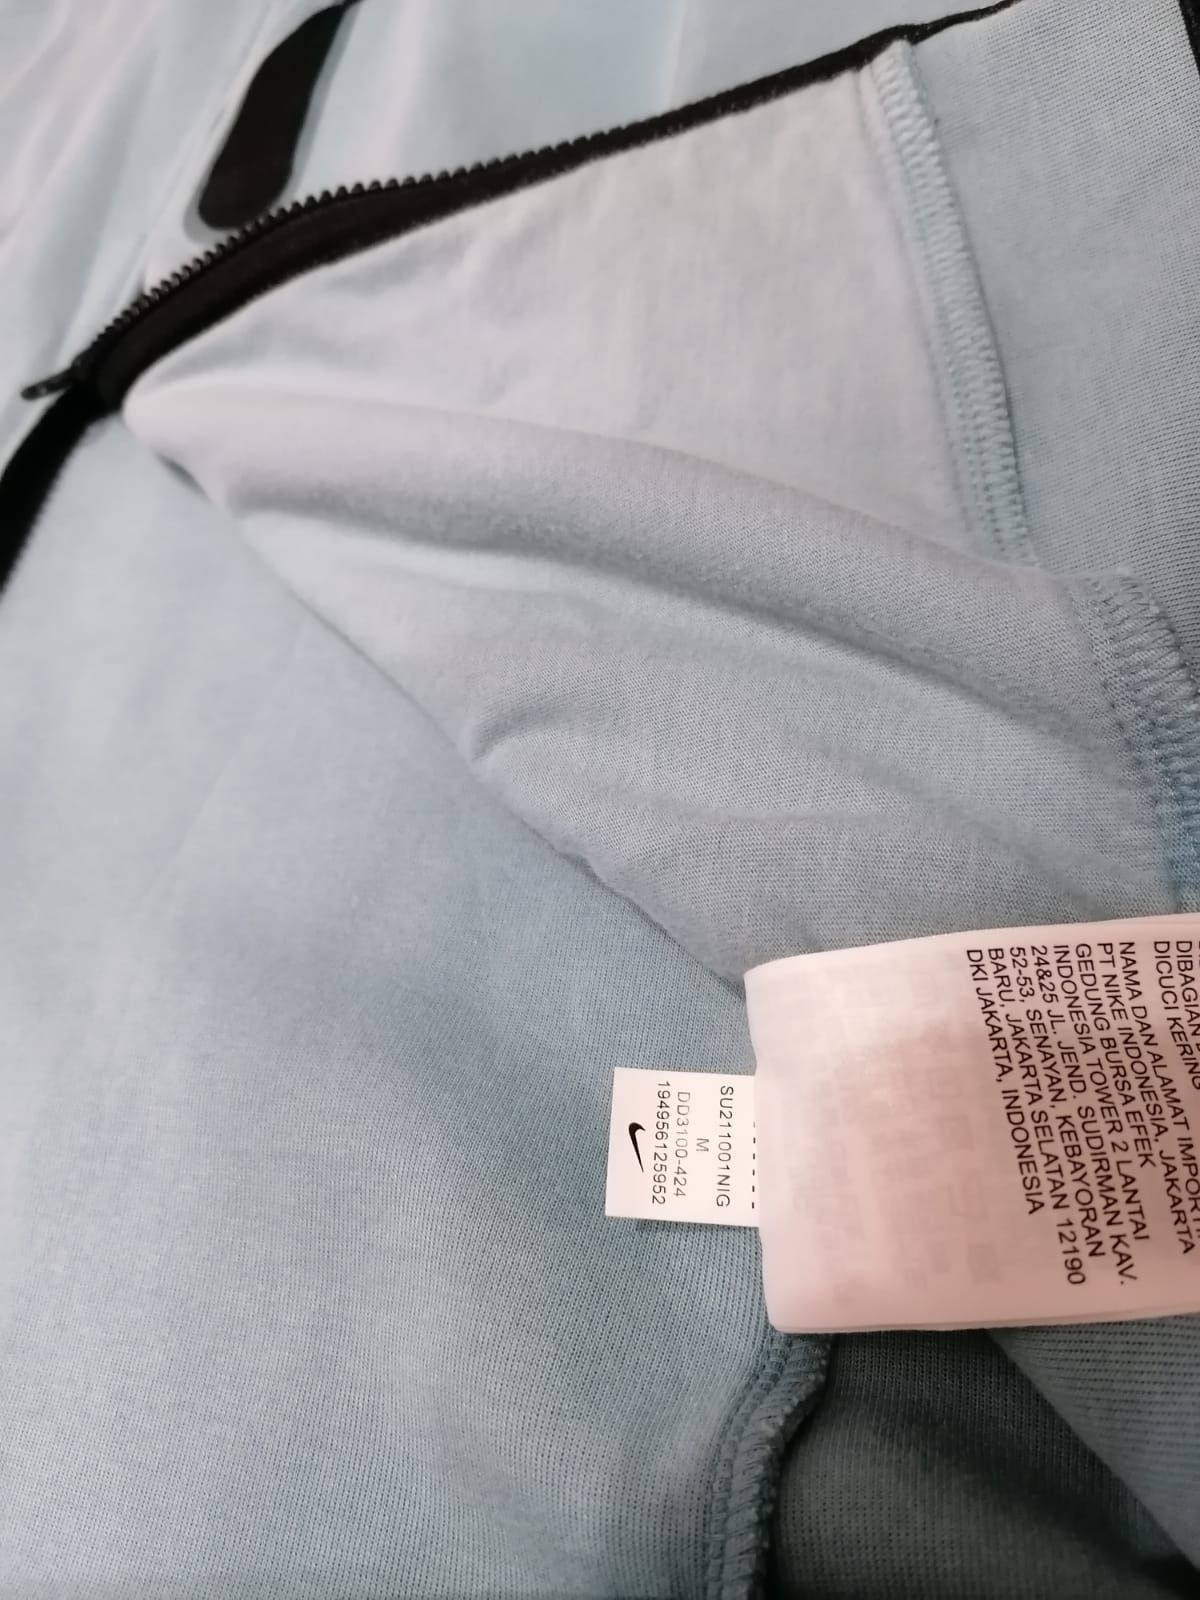 Nike tech fleece baby blue(full zip hoodie)